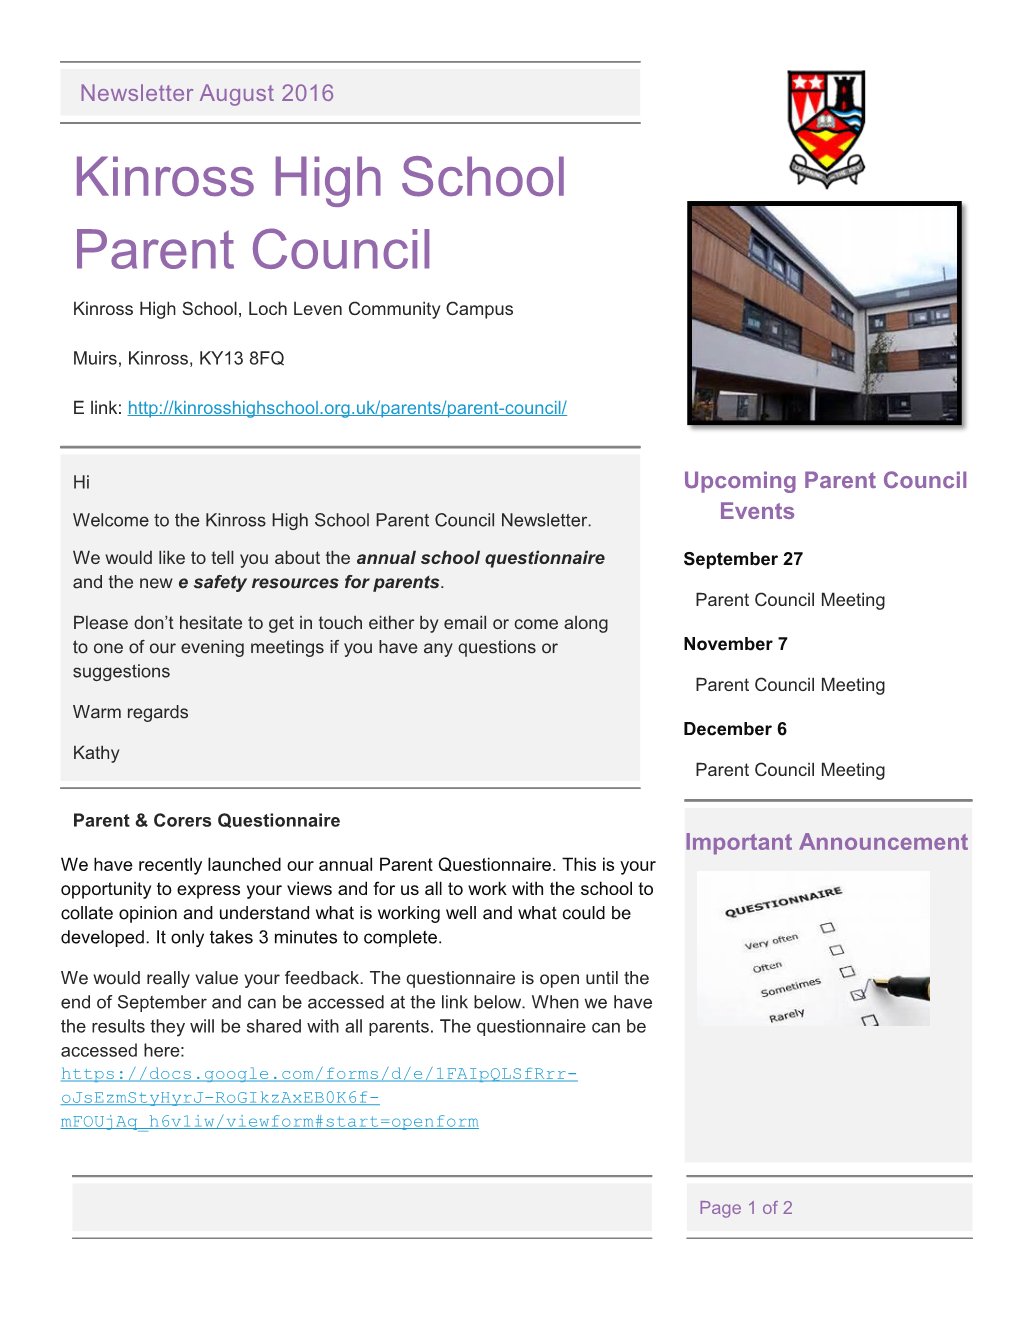 Kinross High School, Loch Leven Community Campus